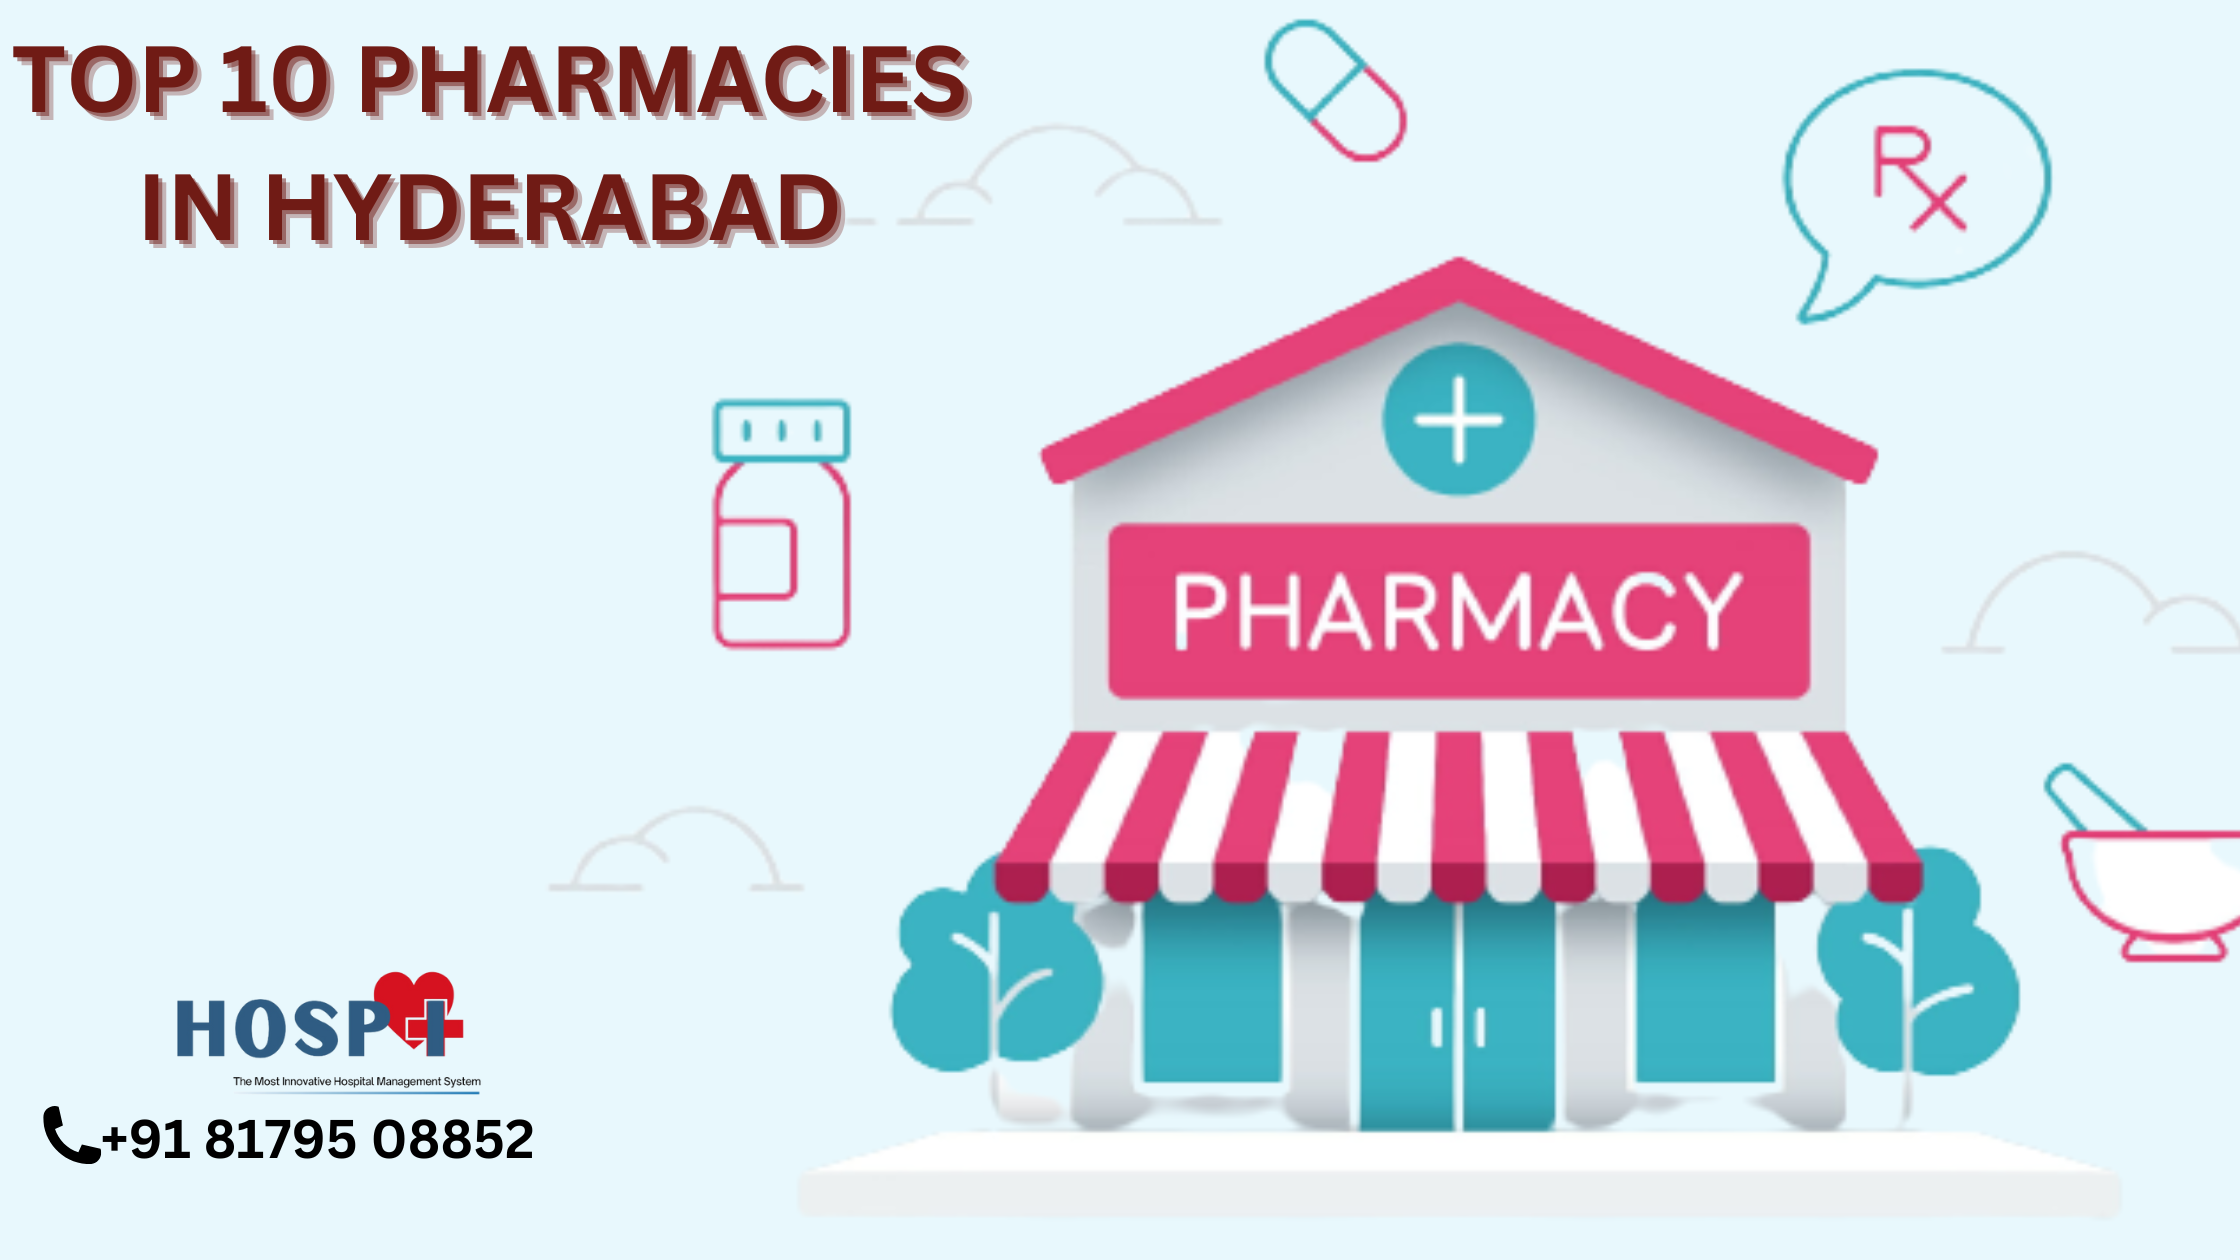 Top 10 Pharmacies in Hyderabad